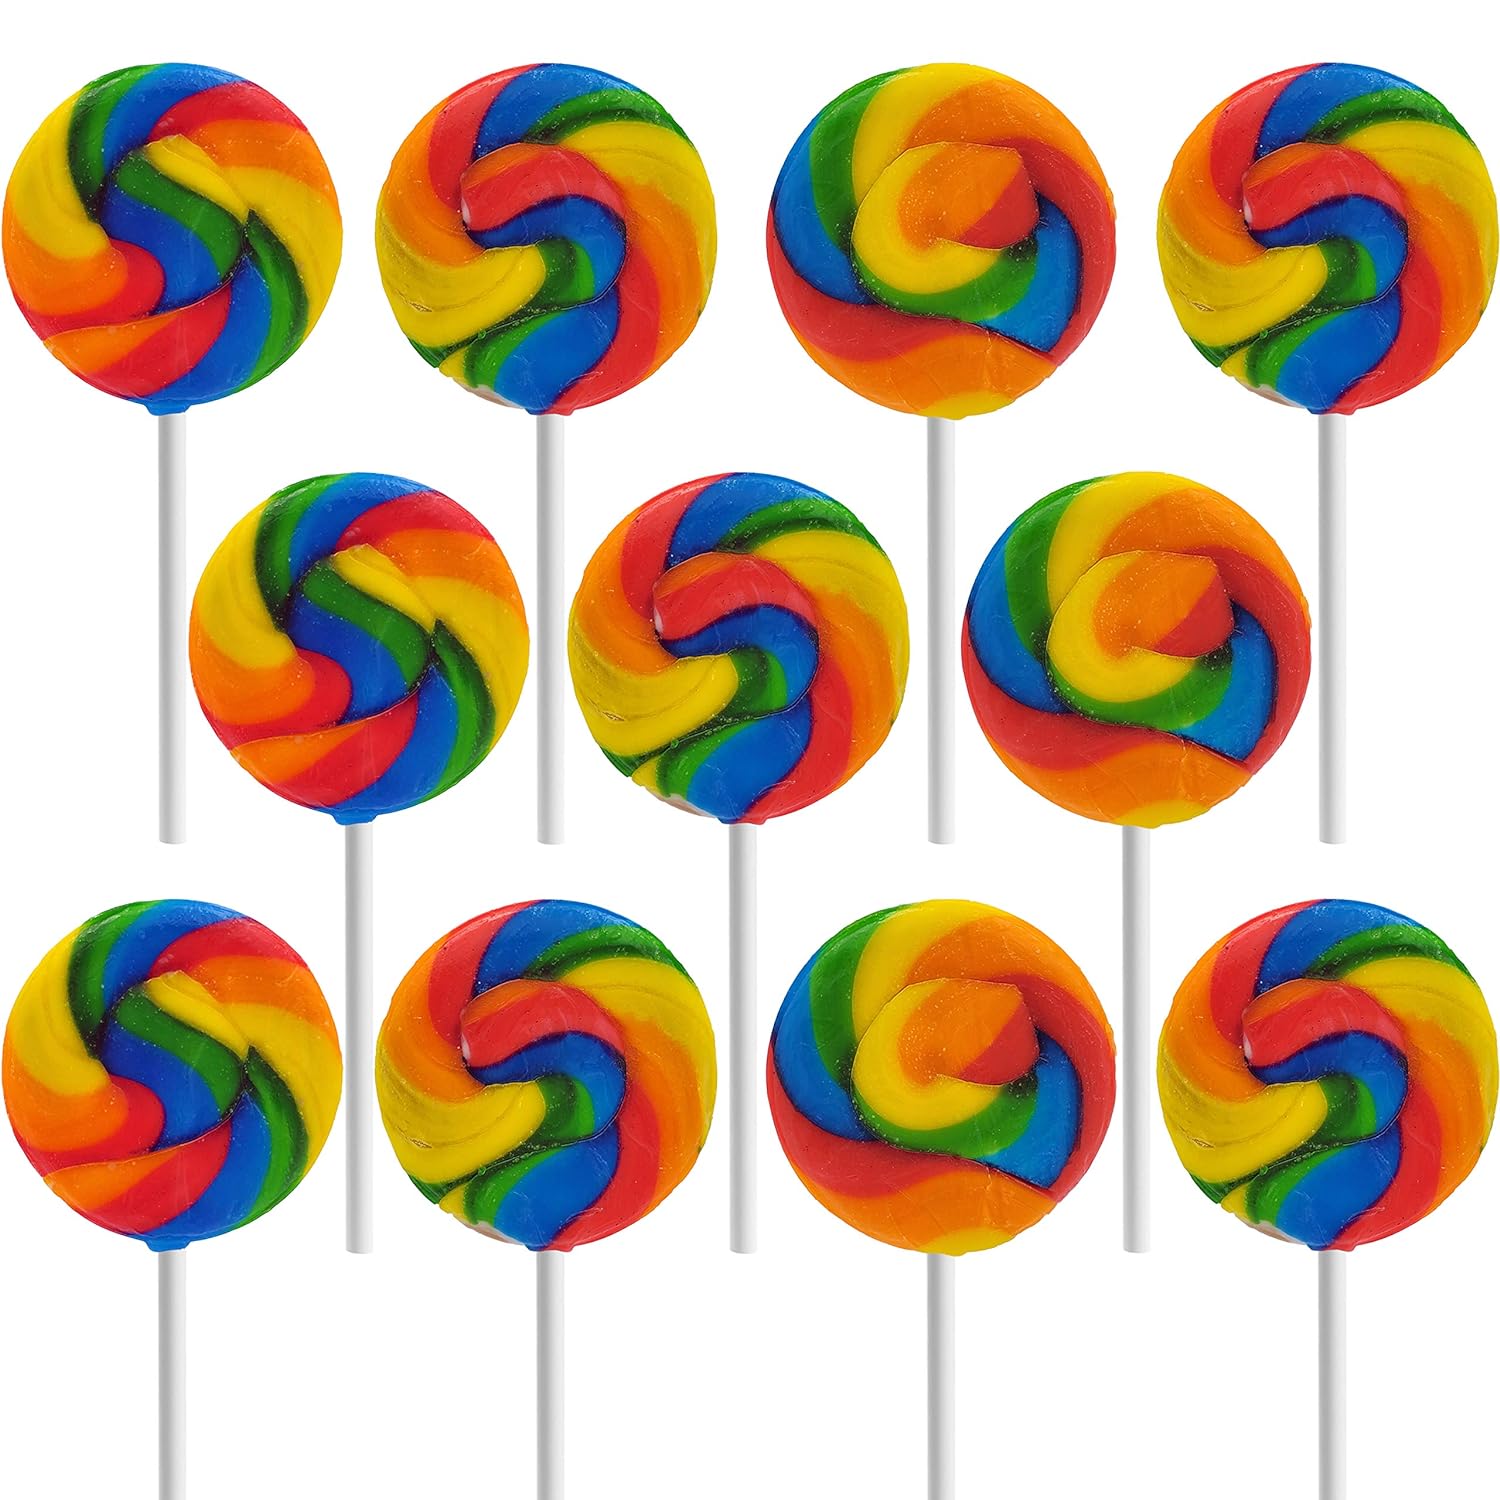  The Dreidel Company Rainbow Swirl Lollipop, Mixed Fruit Flavor, Individually Wrapped, 1.5 Inch Swirl Pop (12-Pack)